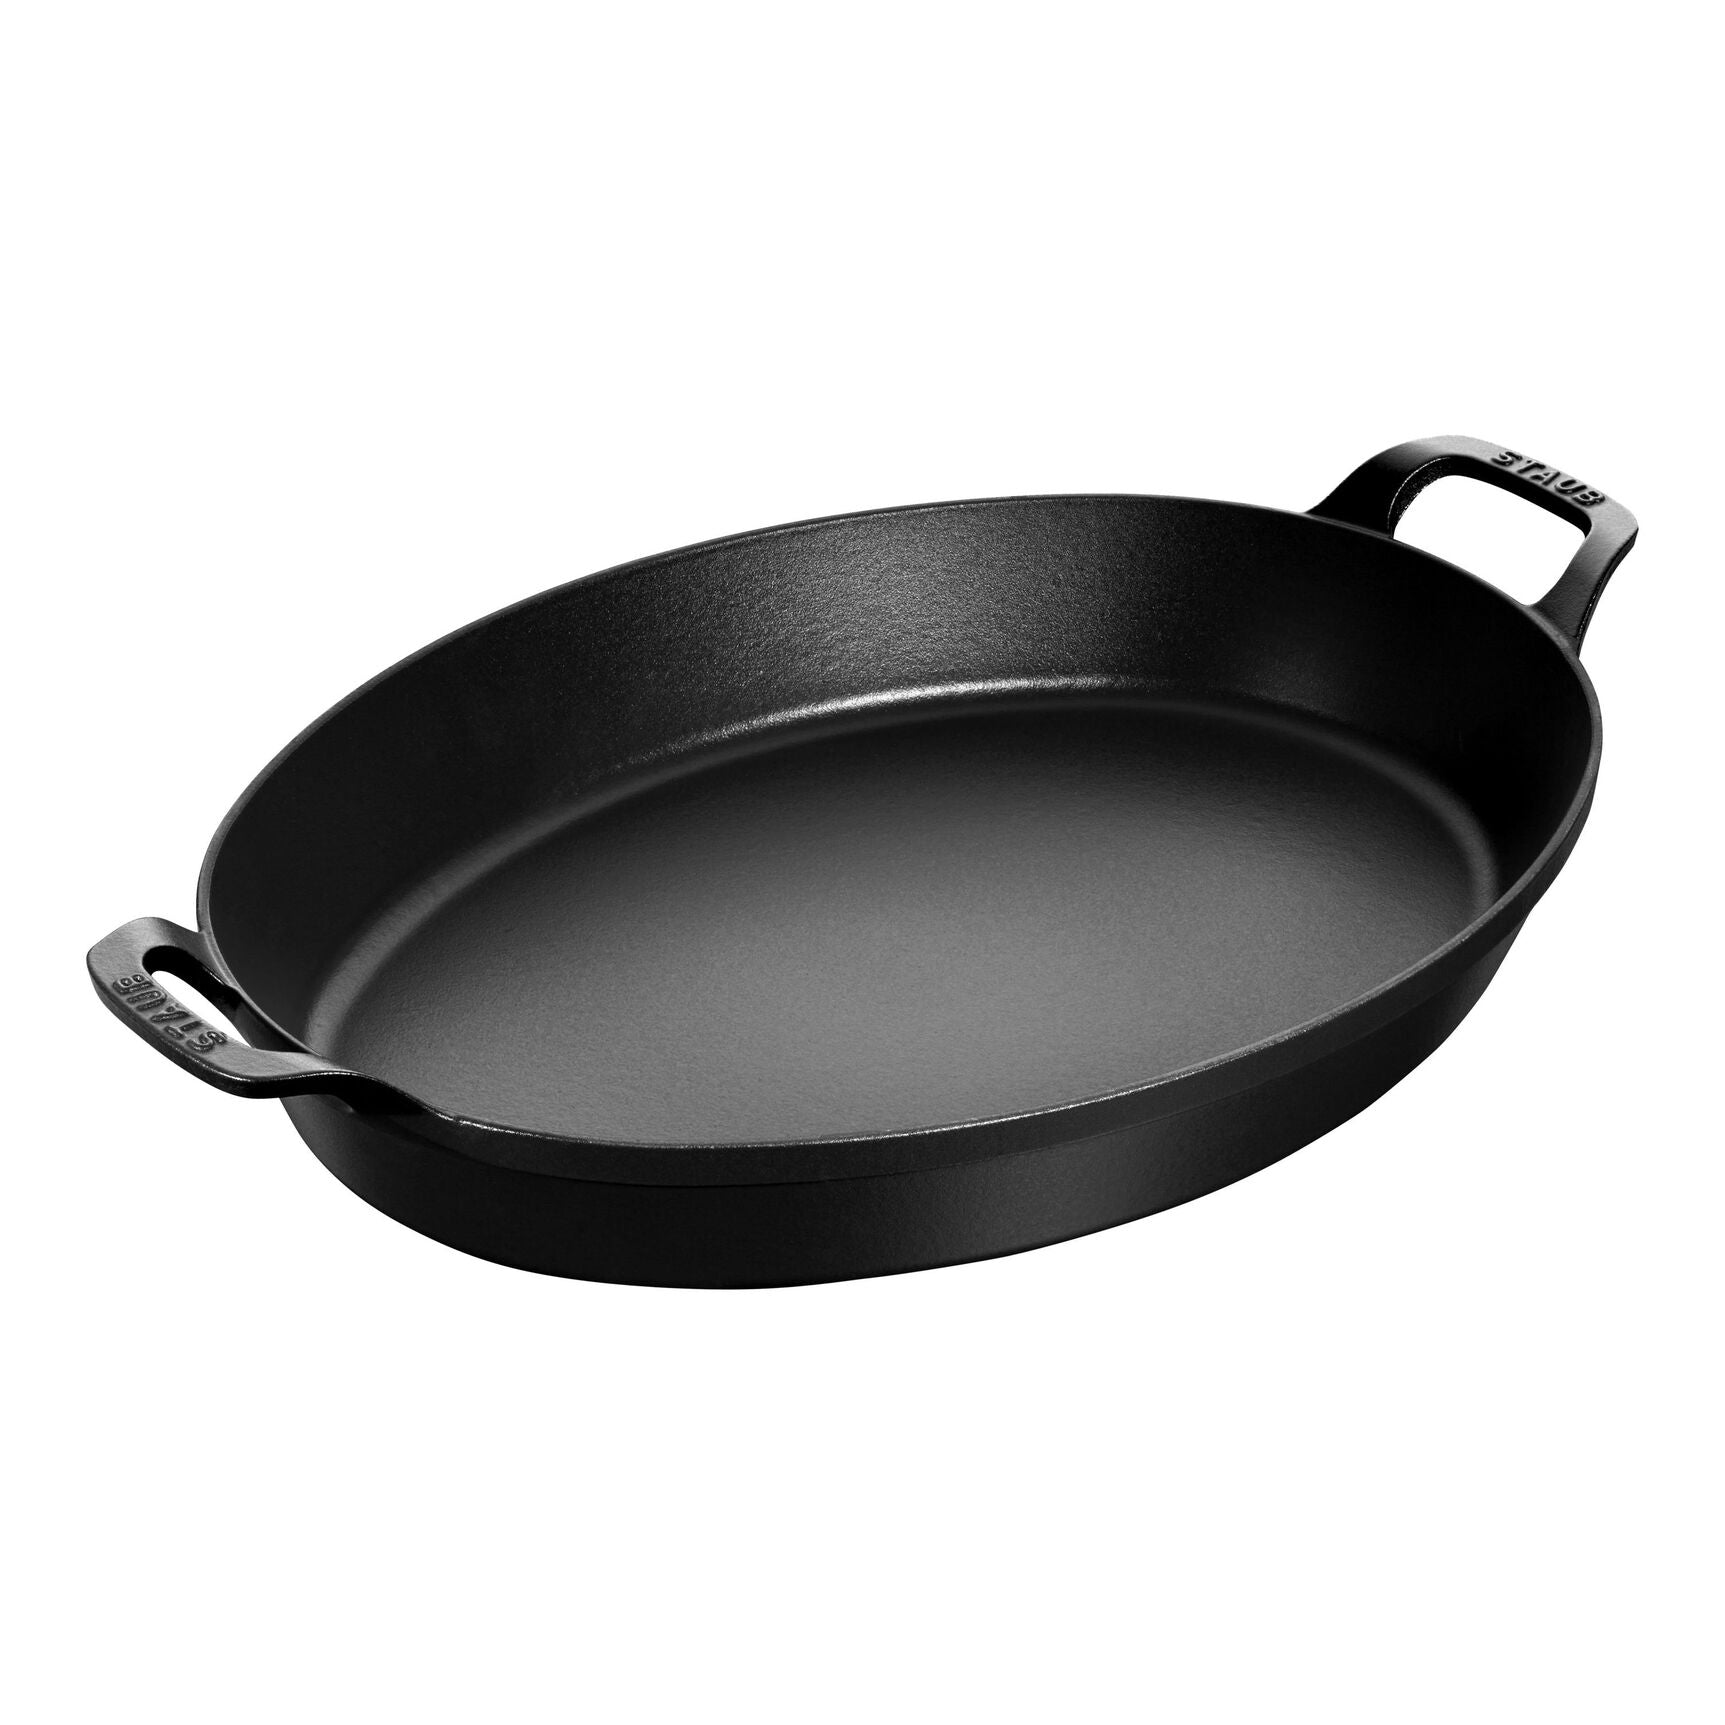 Baking dish Staub oval 37 cm, Black 40508-283-0